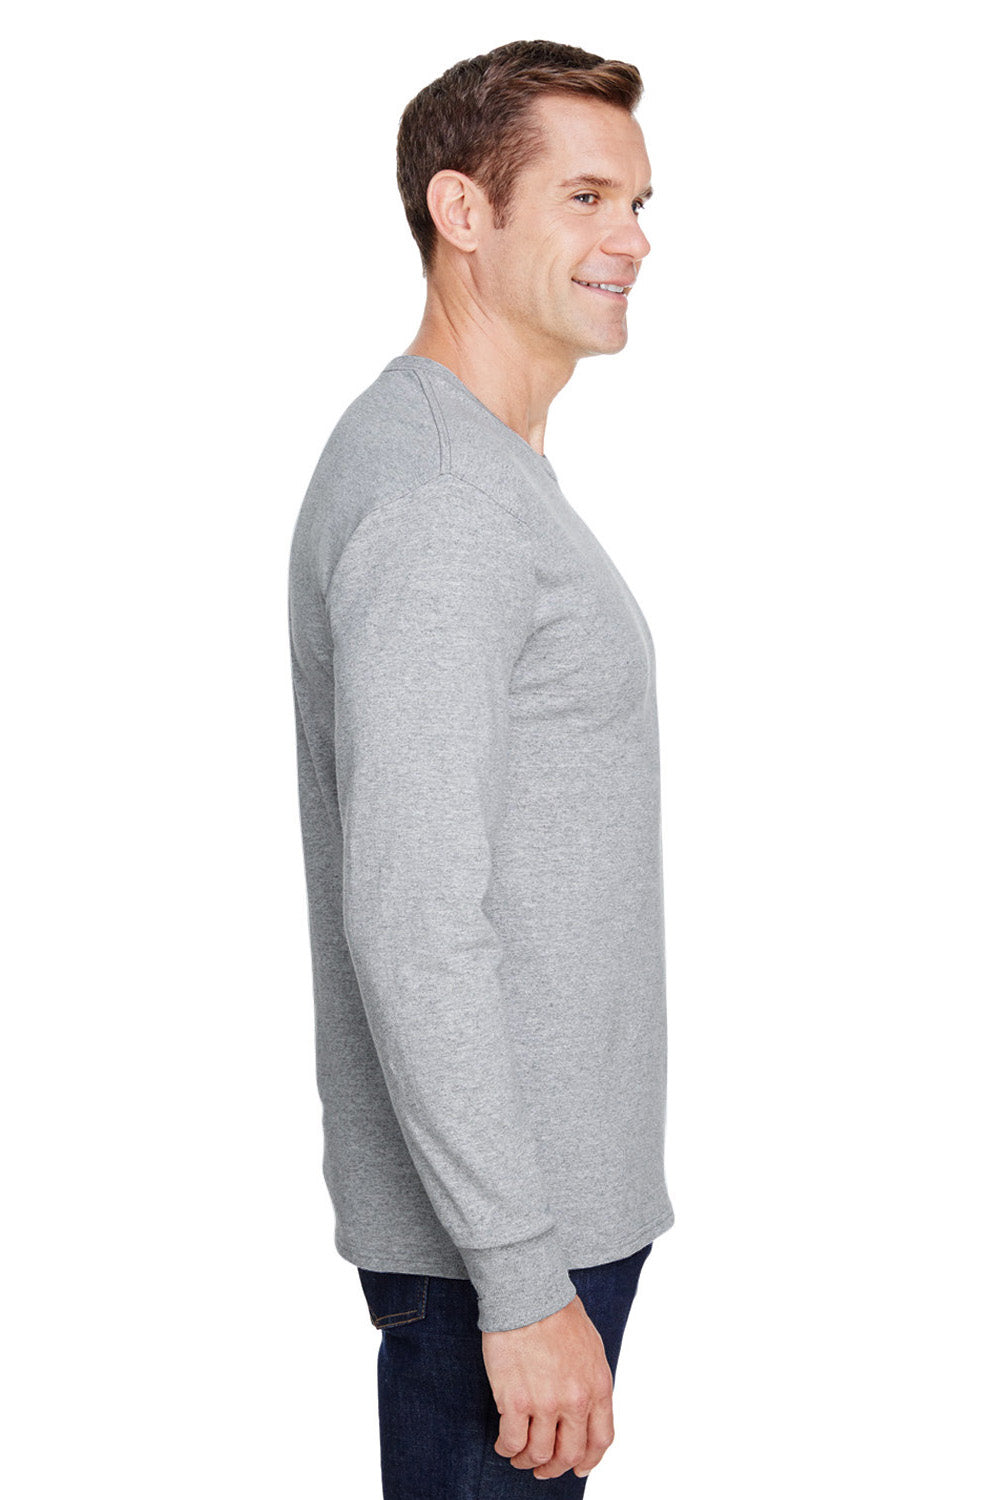 Hanes W120 Mens Workwear Long Sleeve Crewneck T-Shirt w/ Pocket Light Steel Grey Side